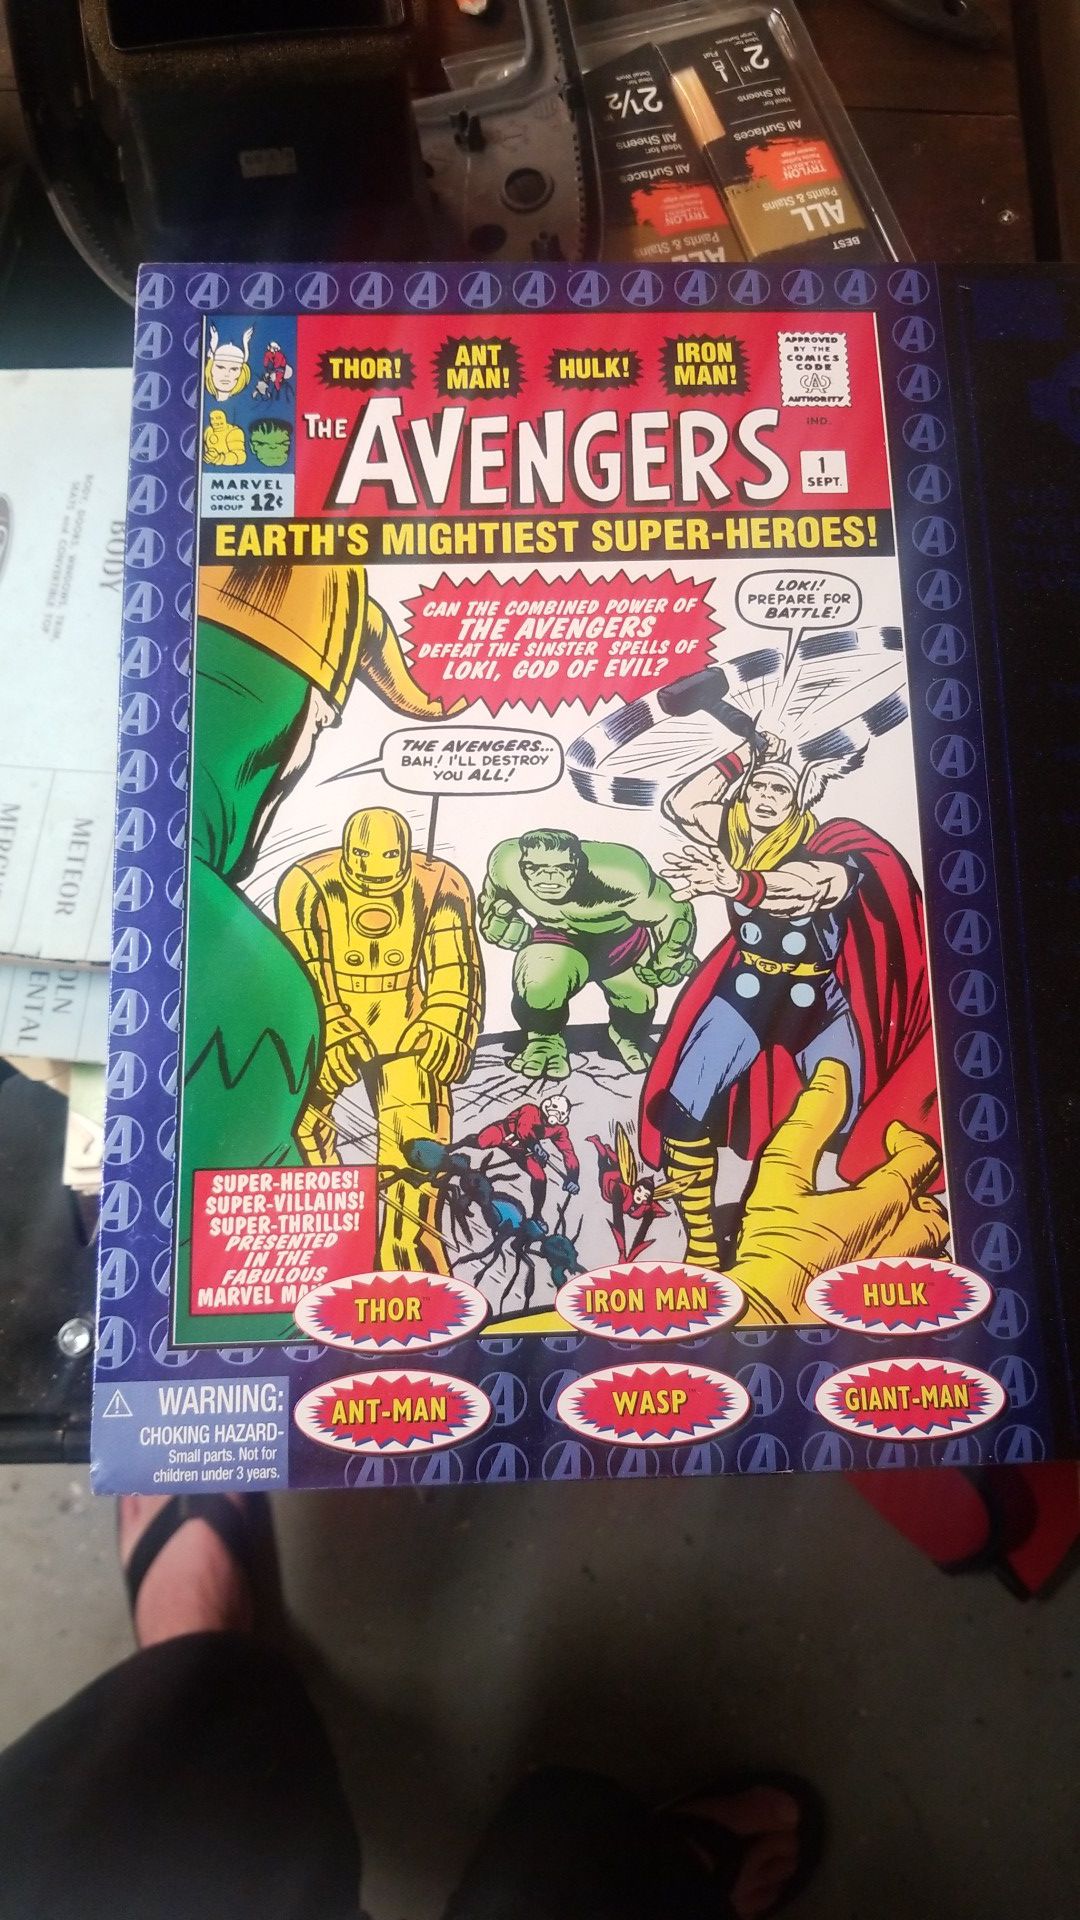 Avengers collector action figure set